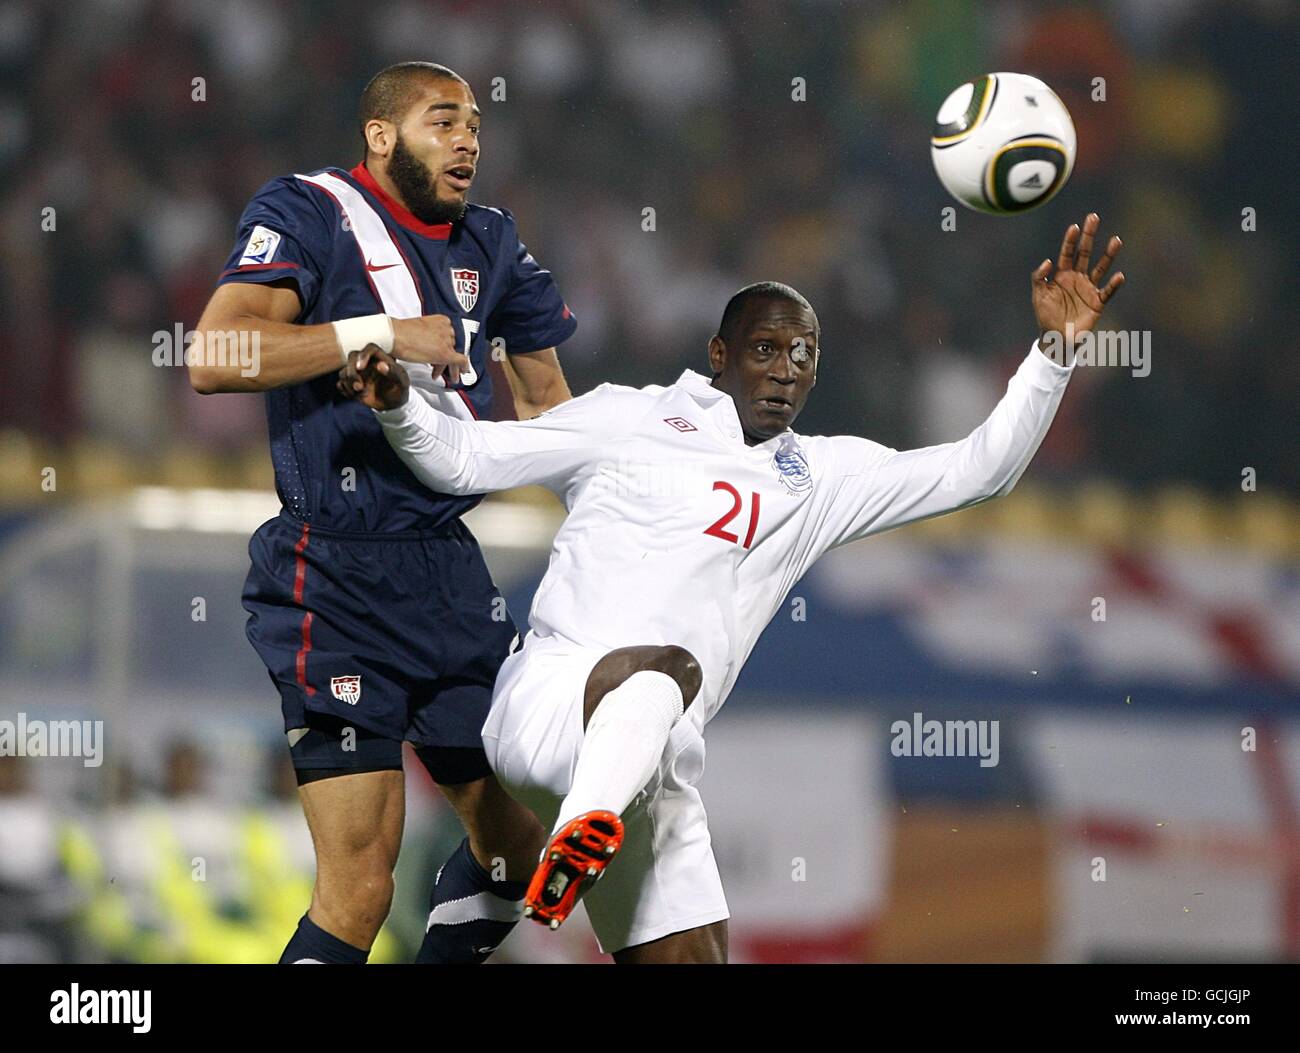 England's Emile Heskey (right) and USA's Oguchi Onyewu (left) battle for the ball Stock Photo